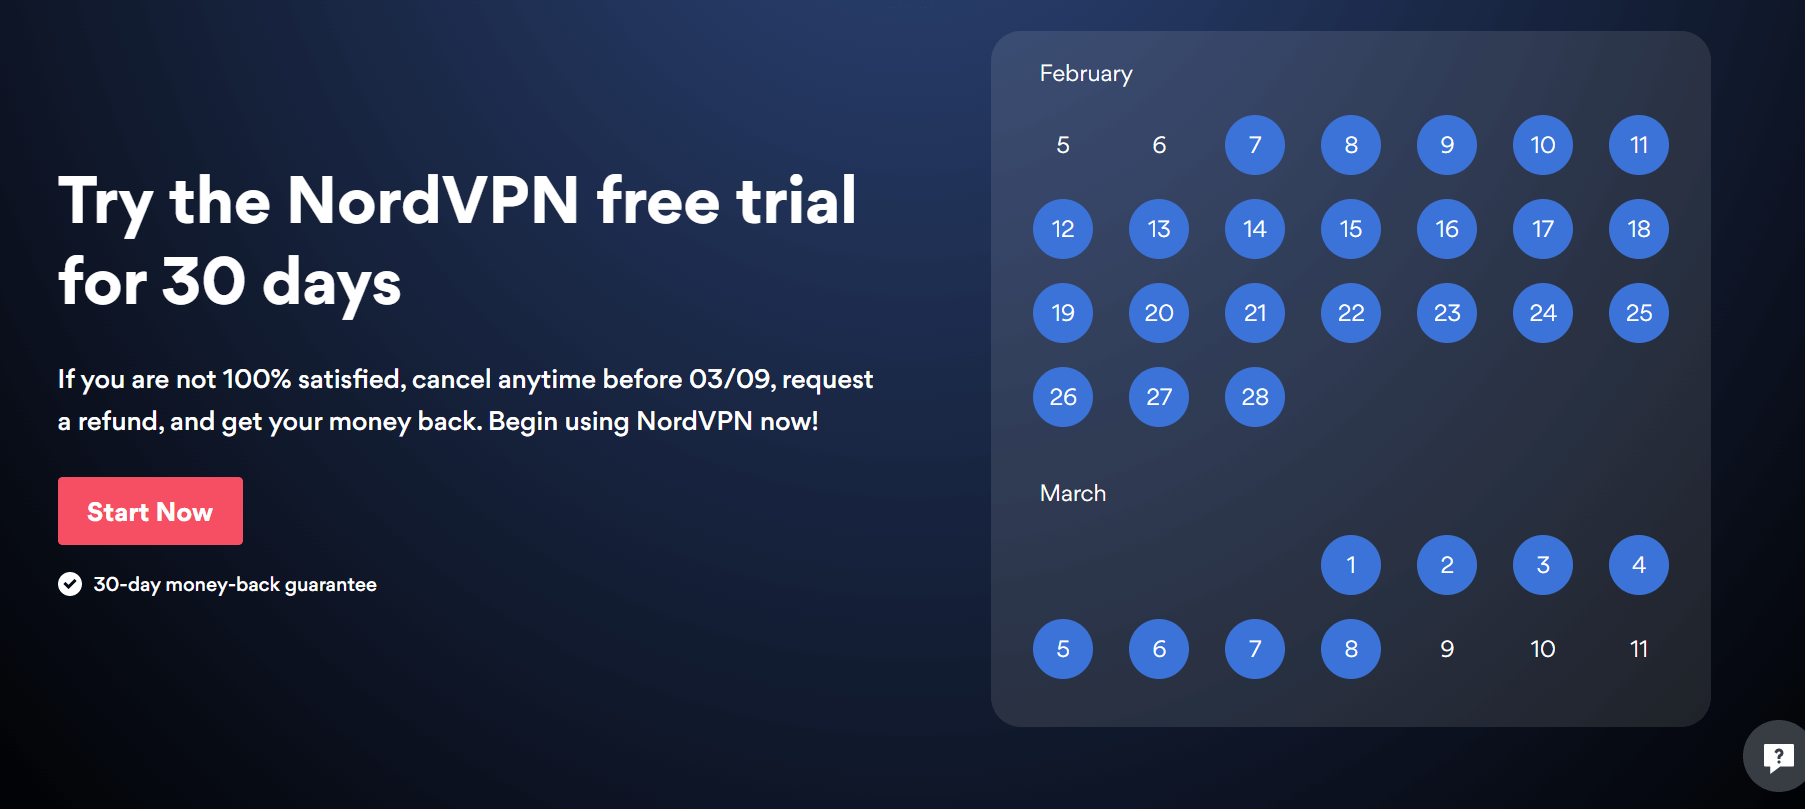 NordVPN best alternative for free trial